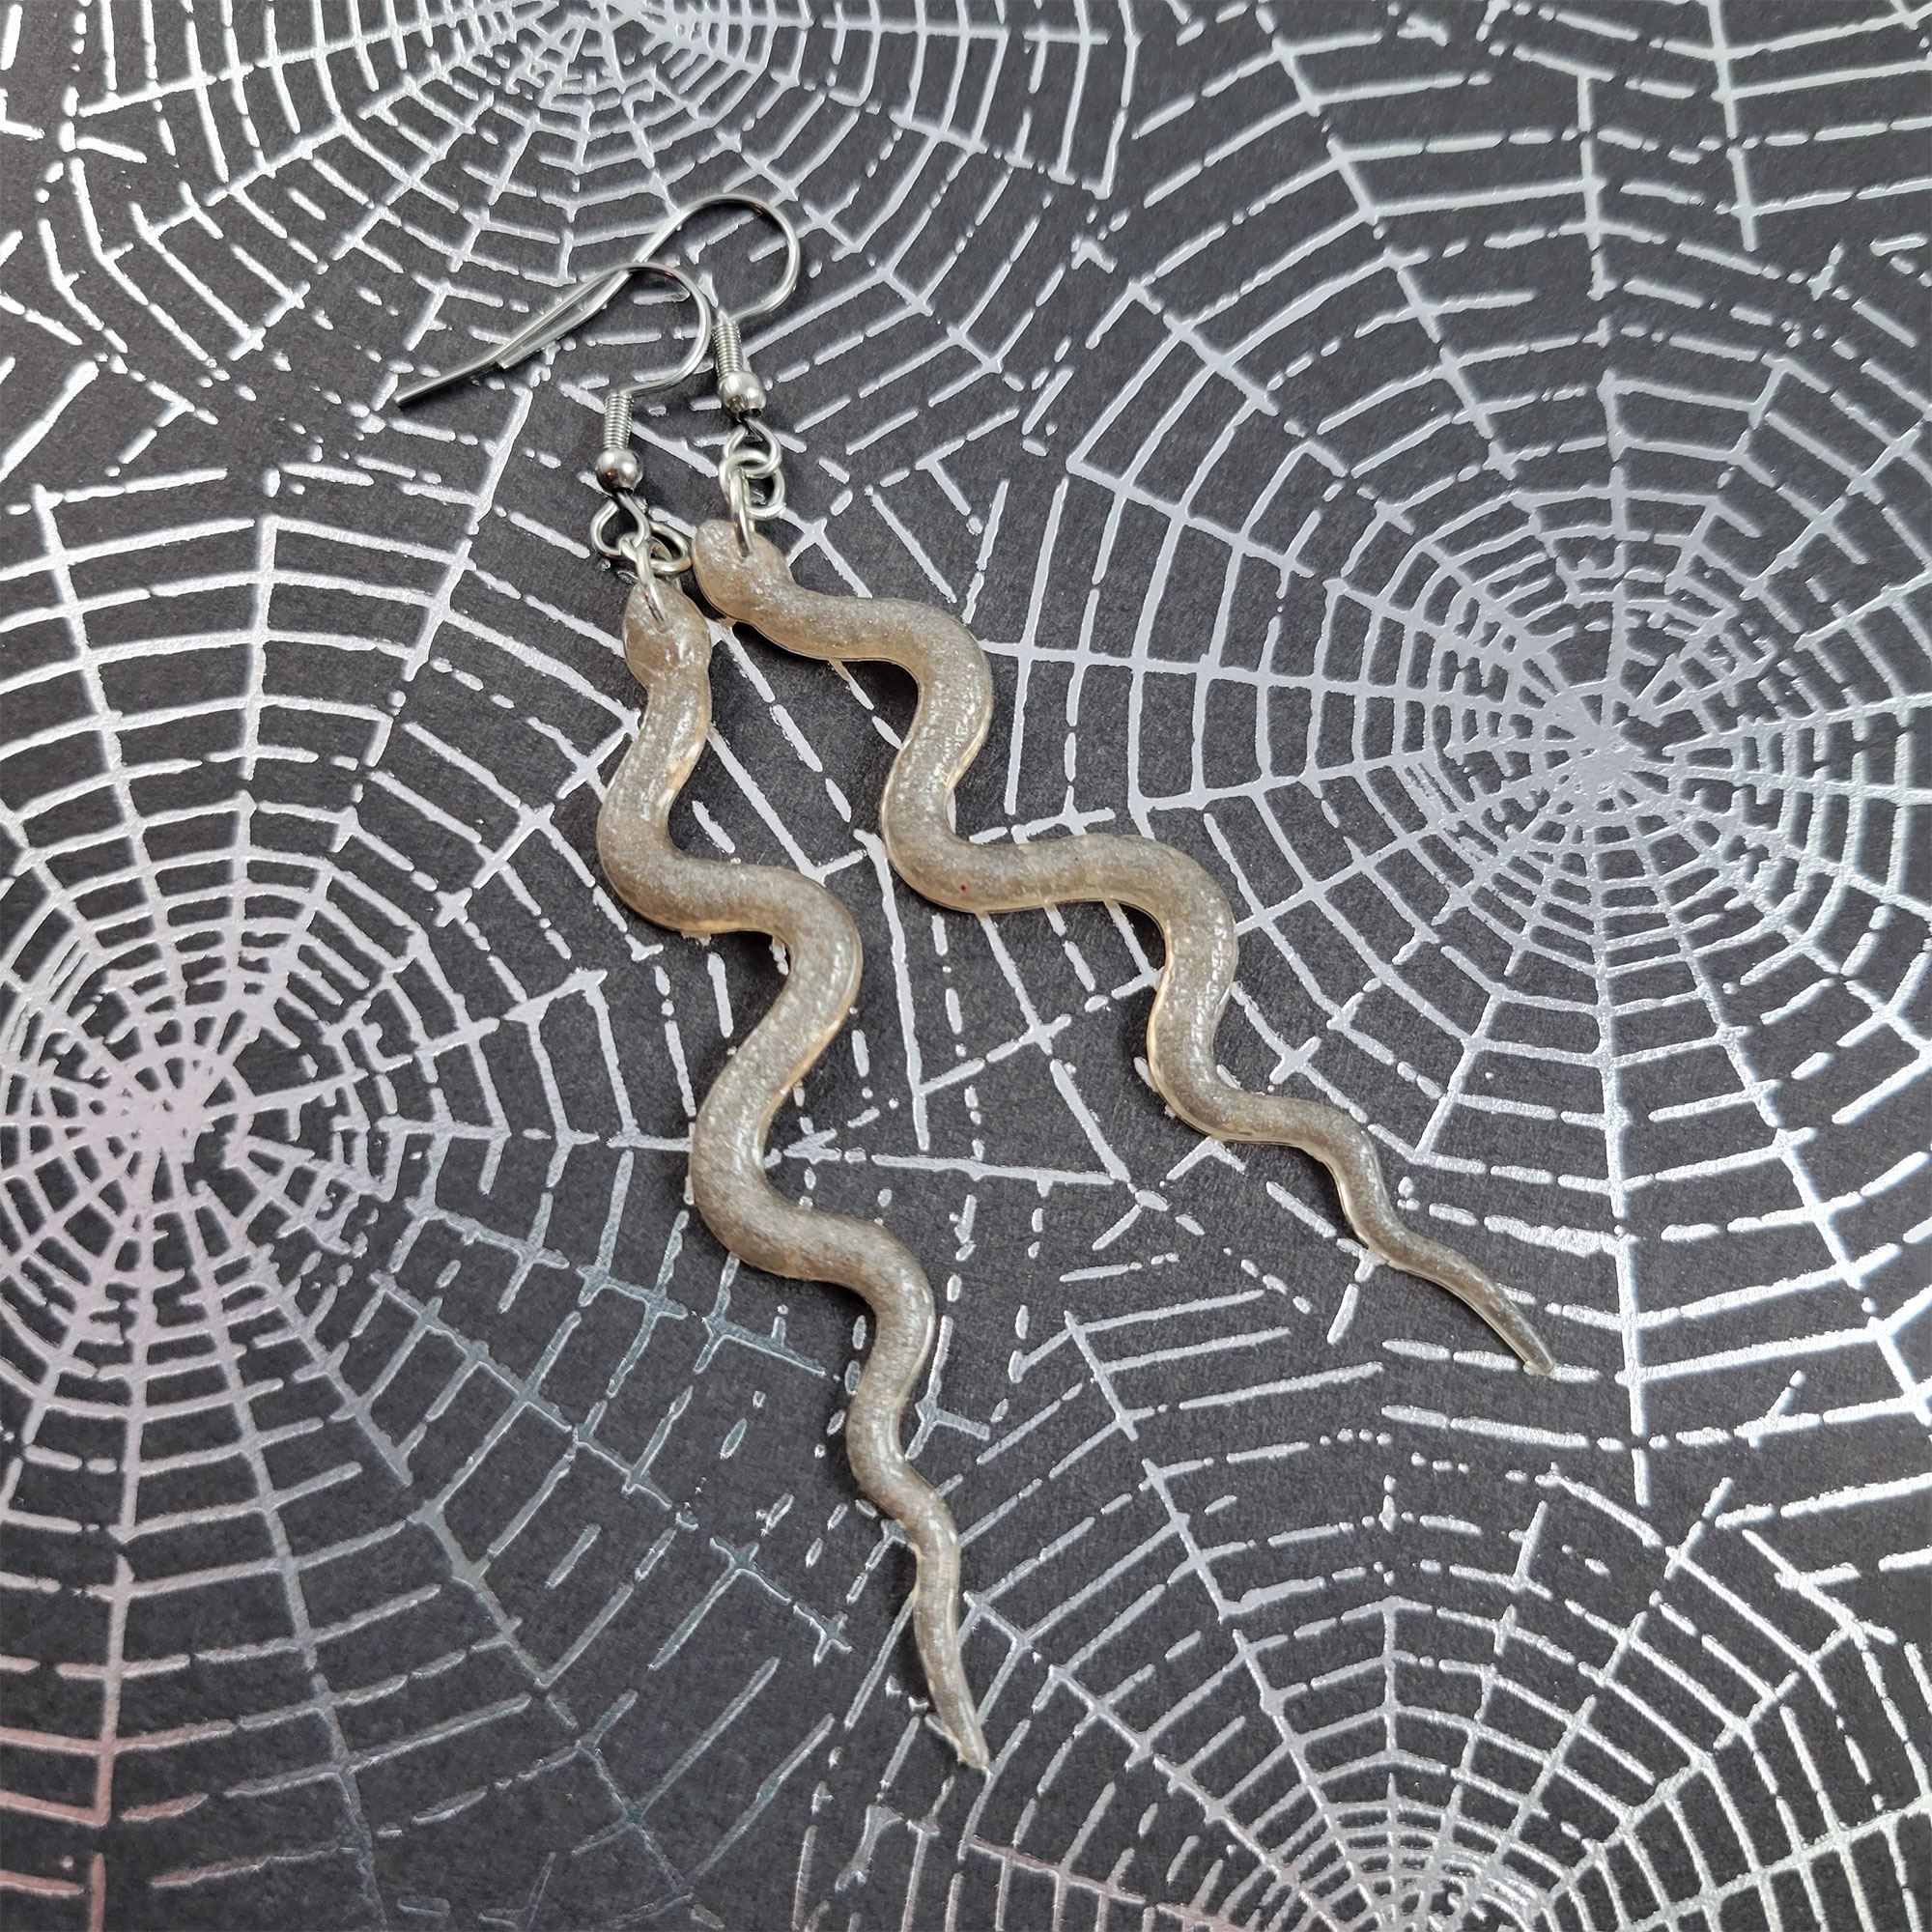 Slithery Snake Earrings by Wilde Designs